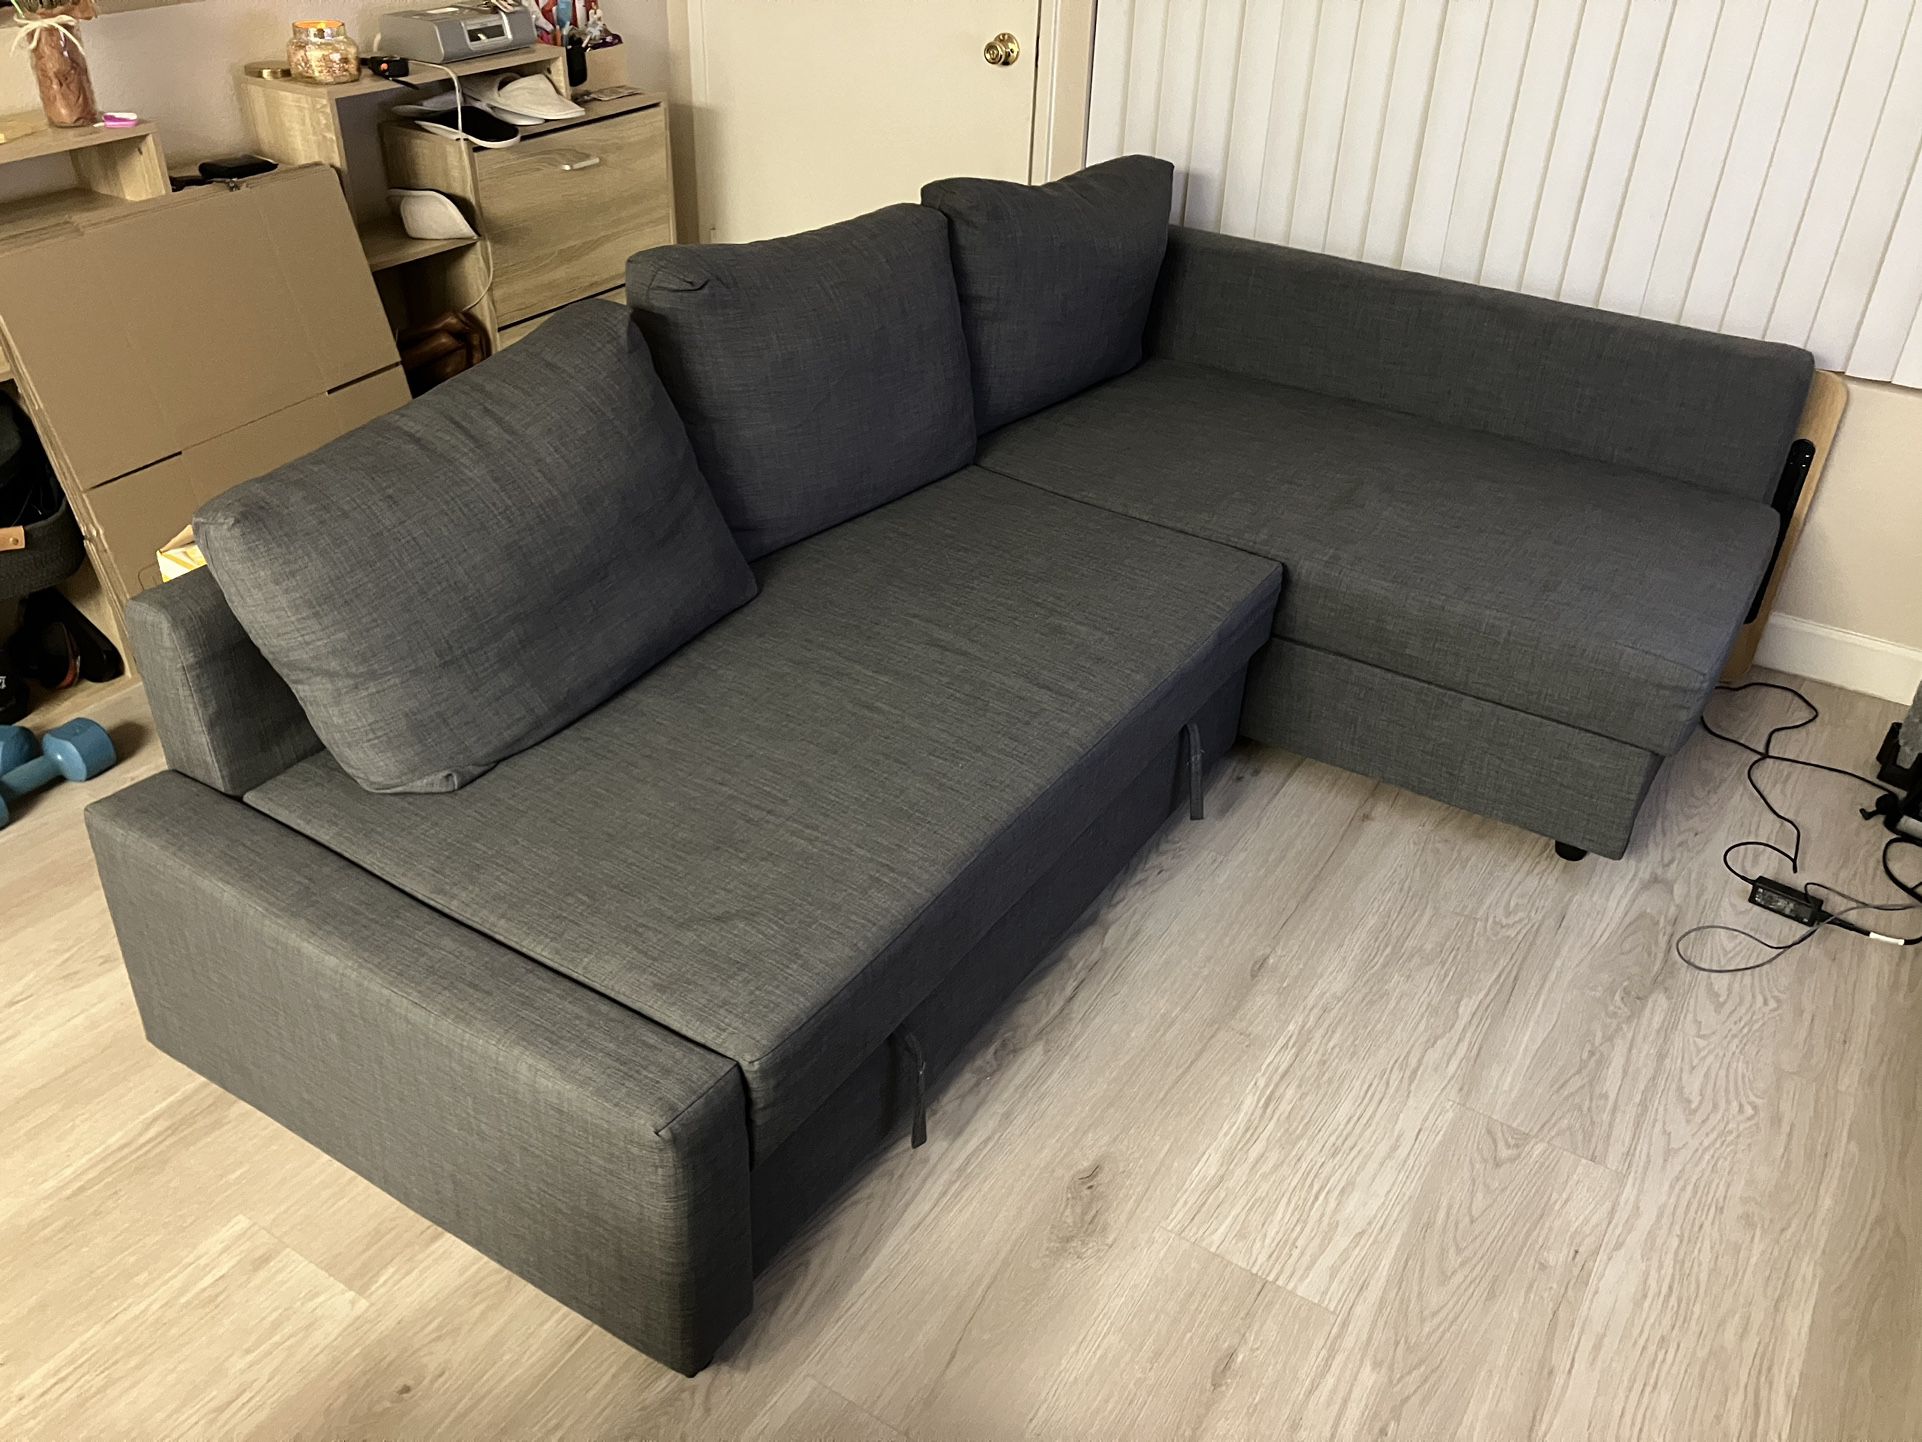 IKEA Couch - Friheten Sleeper Sectional